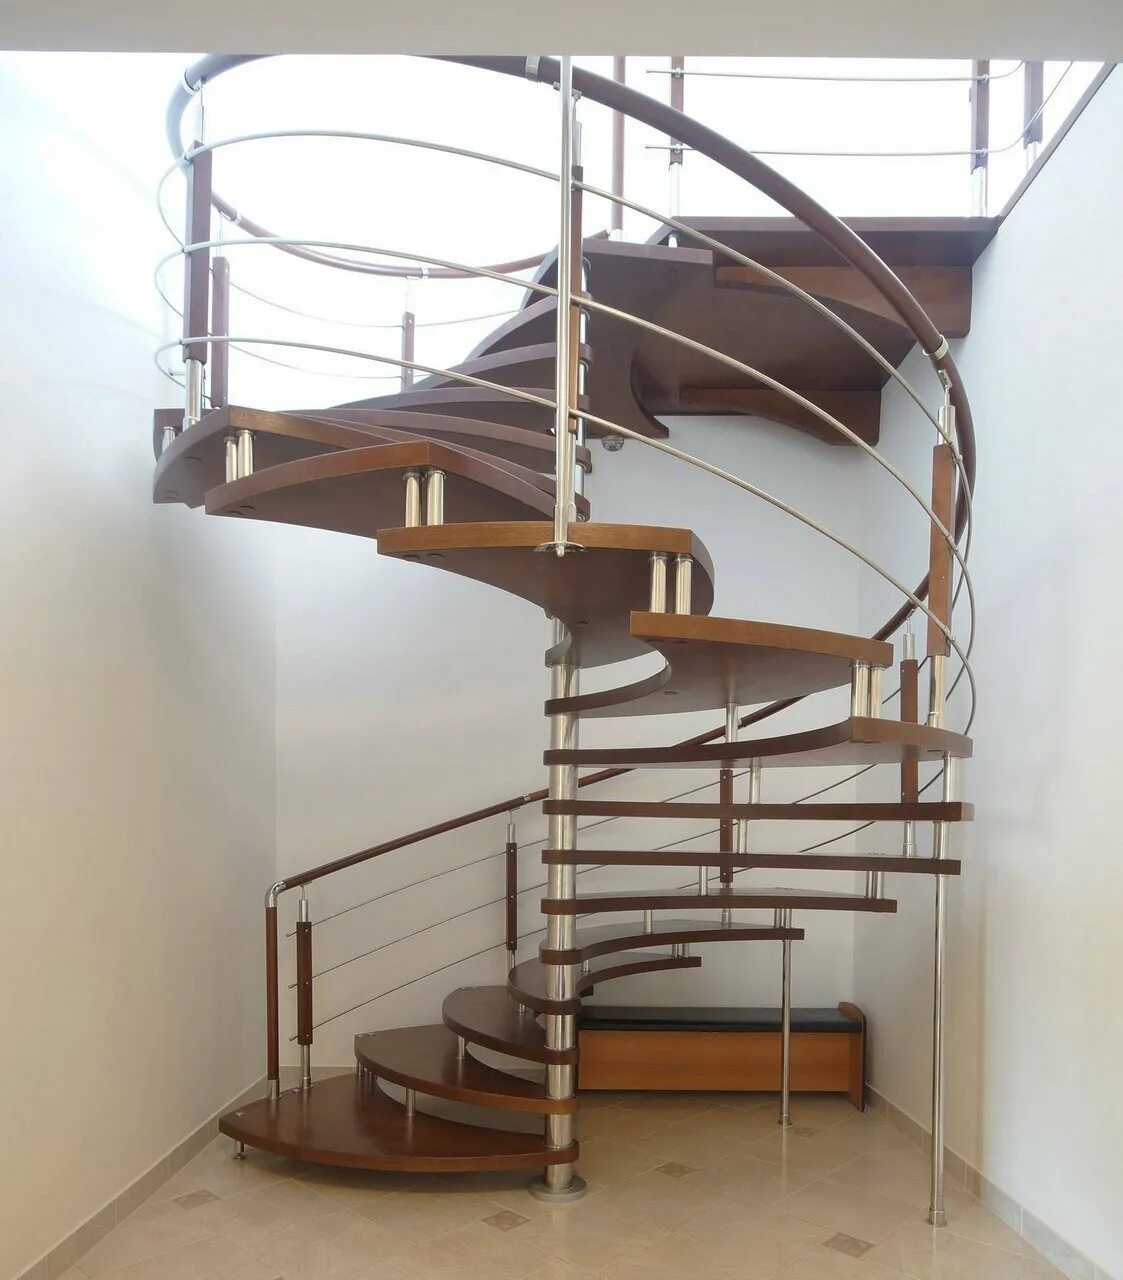 Винтовая лестница на больцах. Лестница на железных больцах. Лестница на металлокаркасе винтовая ступени металл. Valheim винтовая лестница.